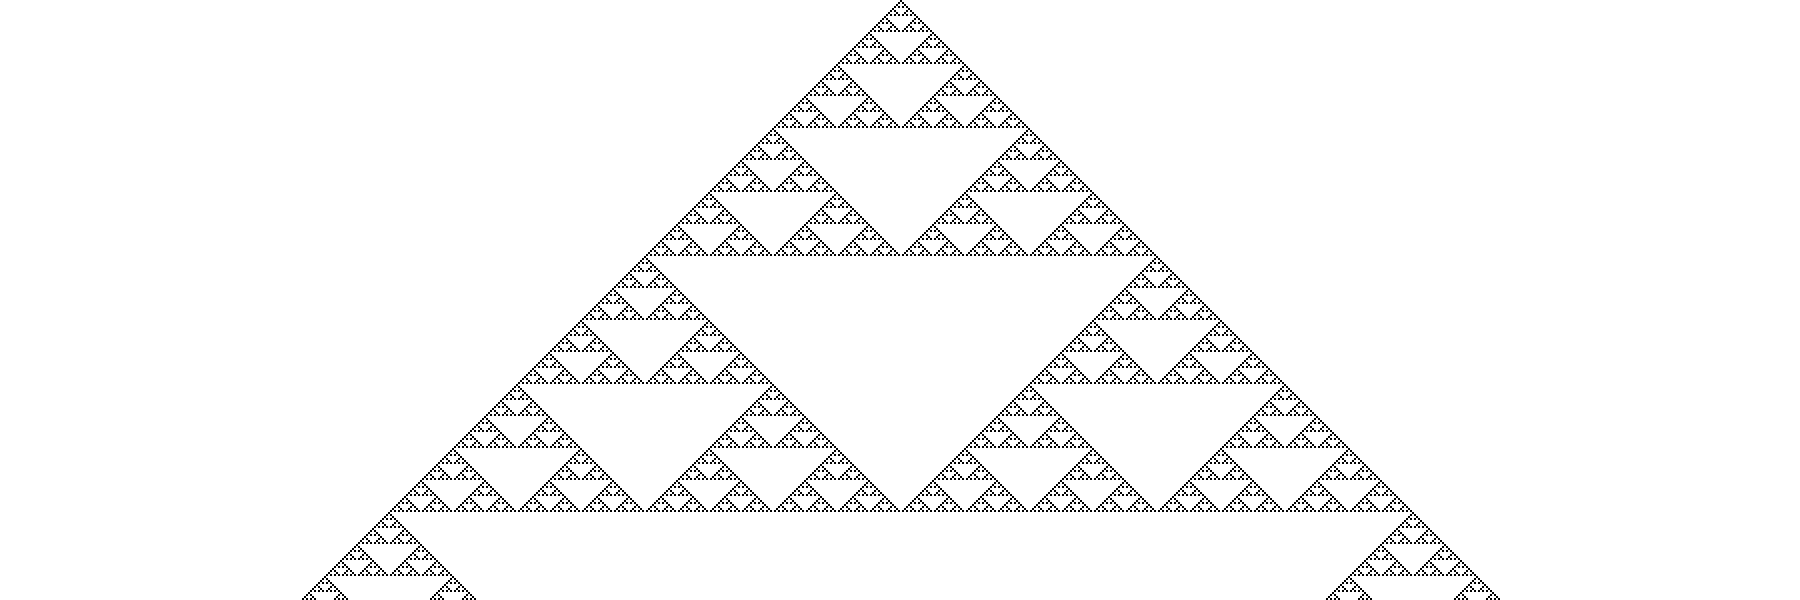 Figure 7.14: Wolfram elementary CA at higher resolution